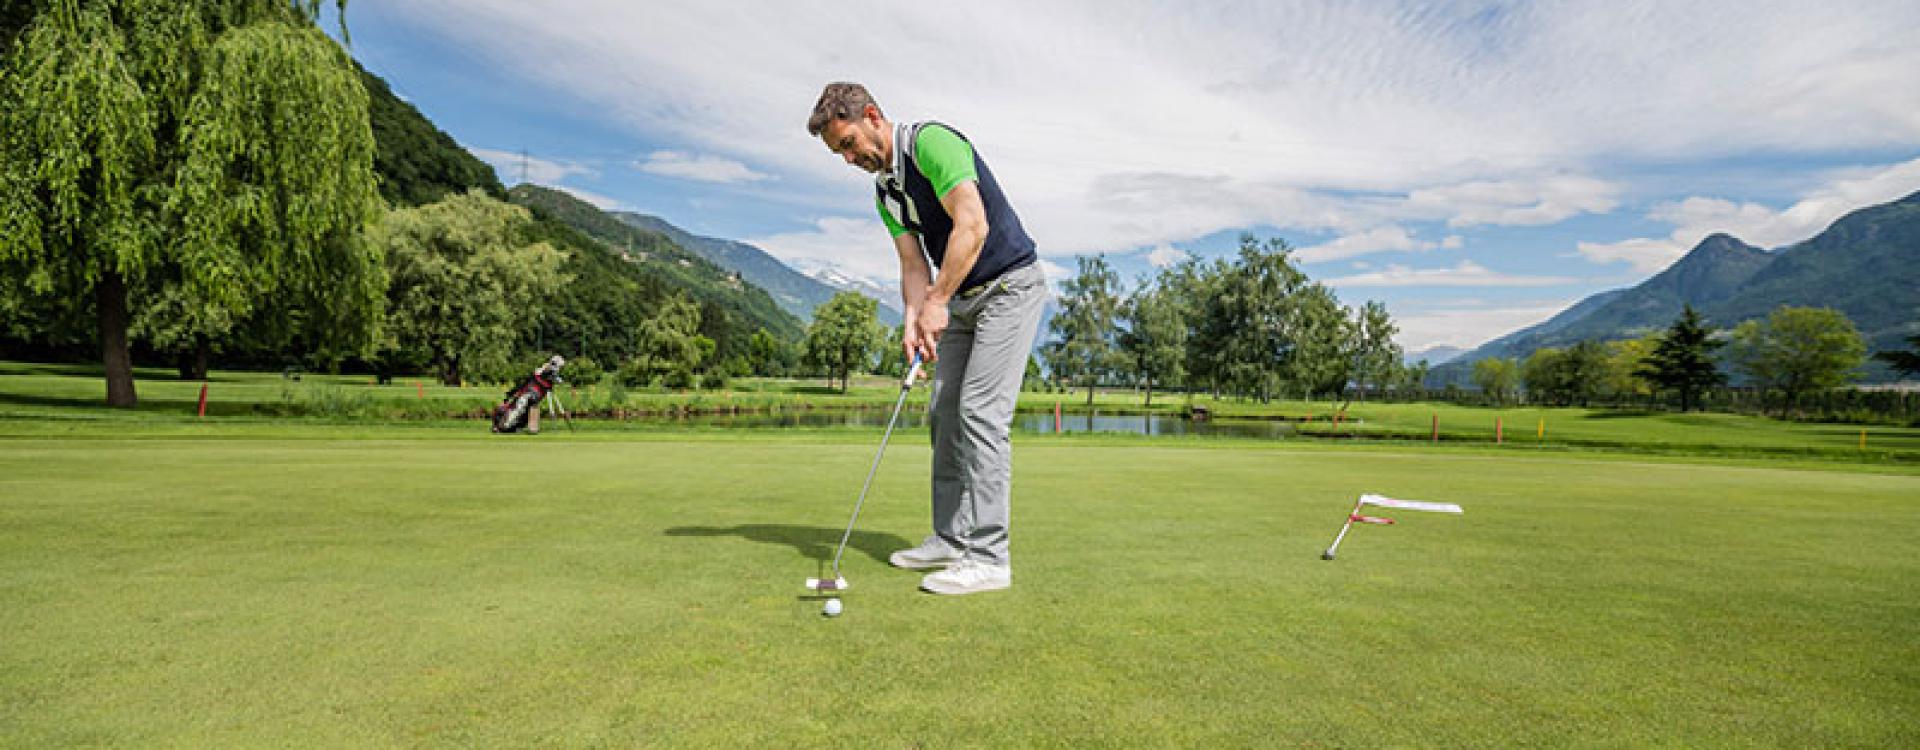 Südtirols schönste Golfplätze